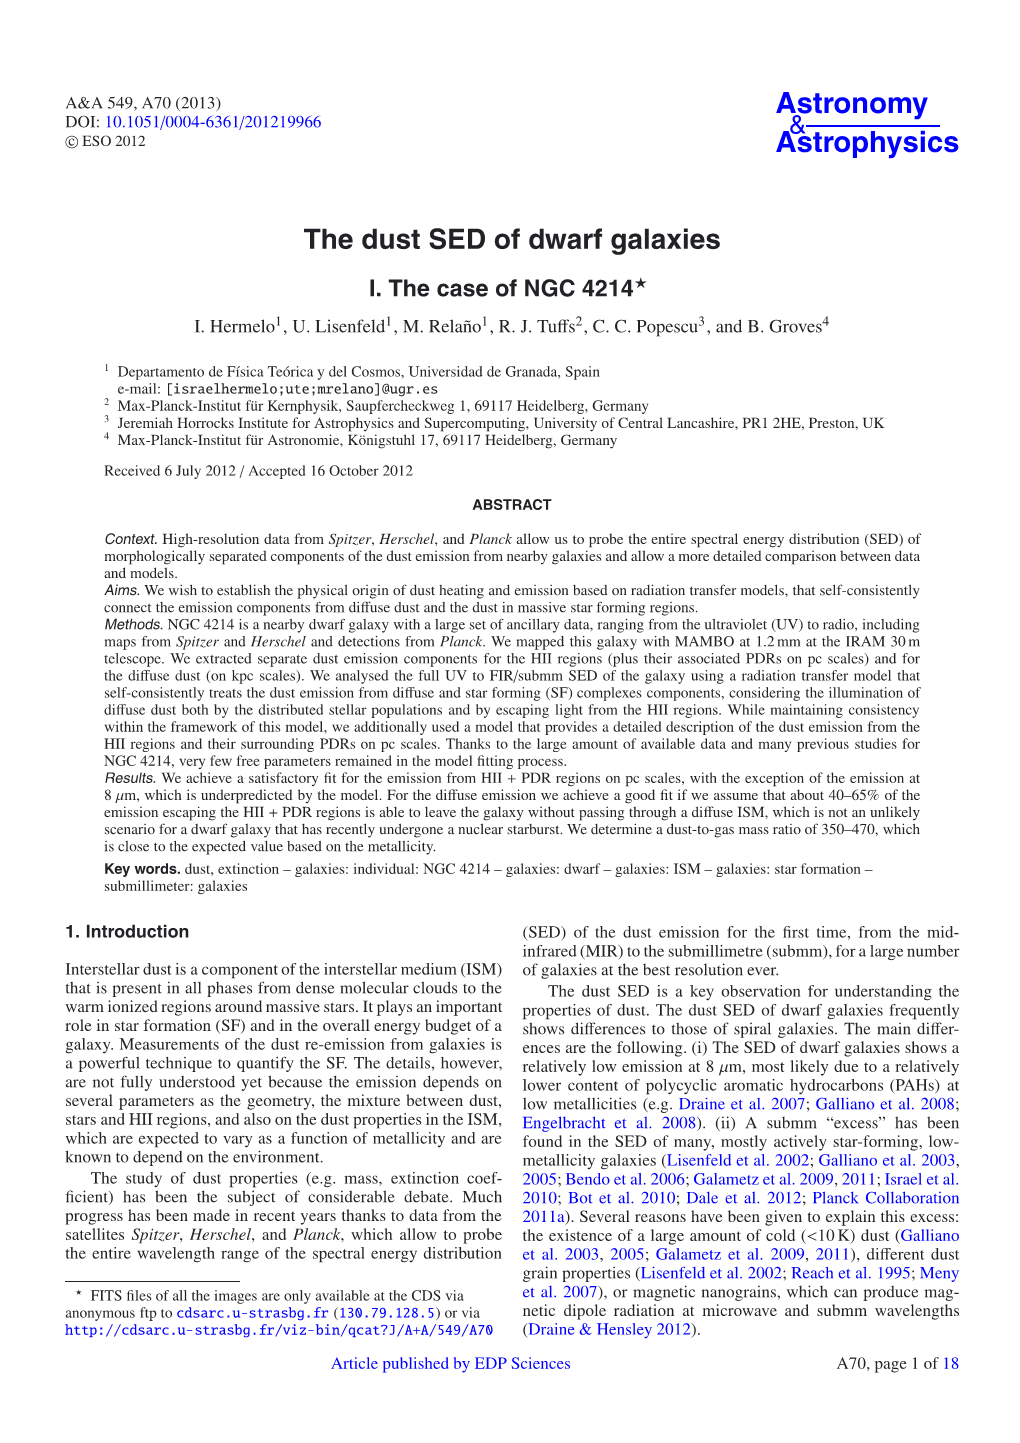 The Dust SED of Dwarf Galaxies I